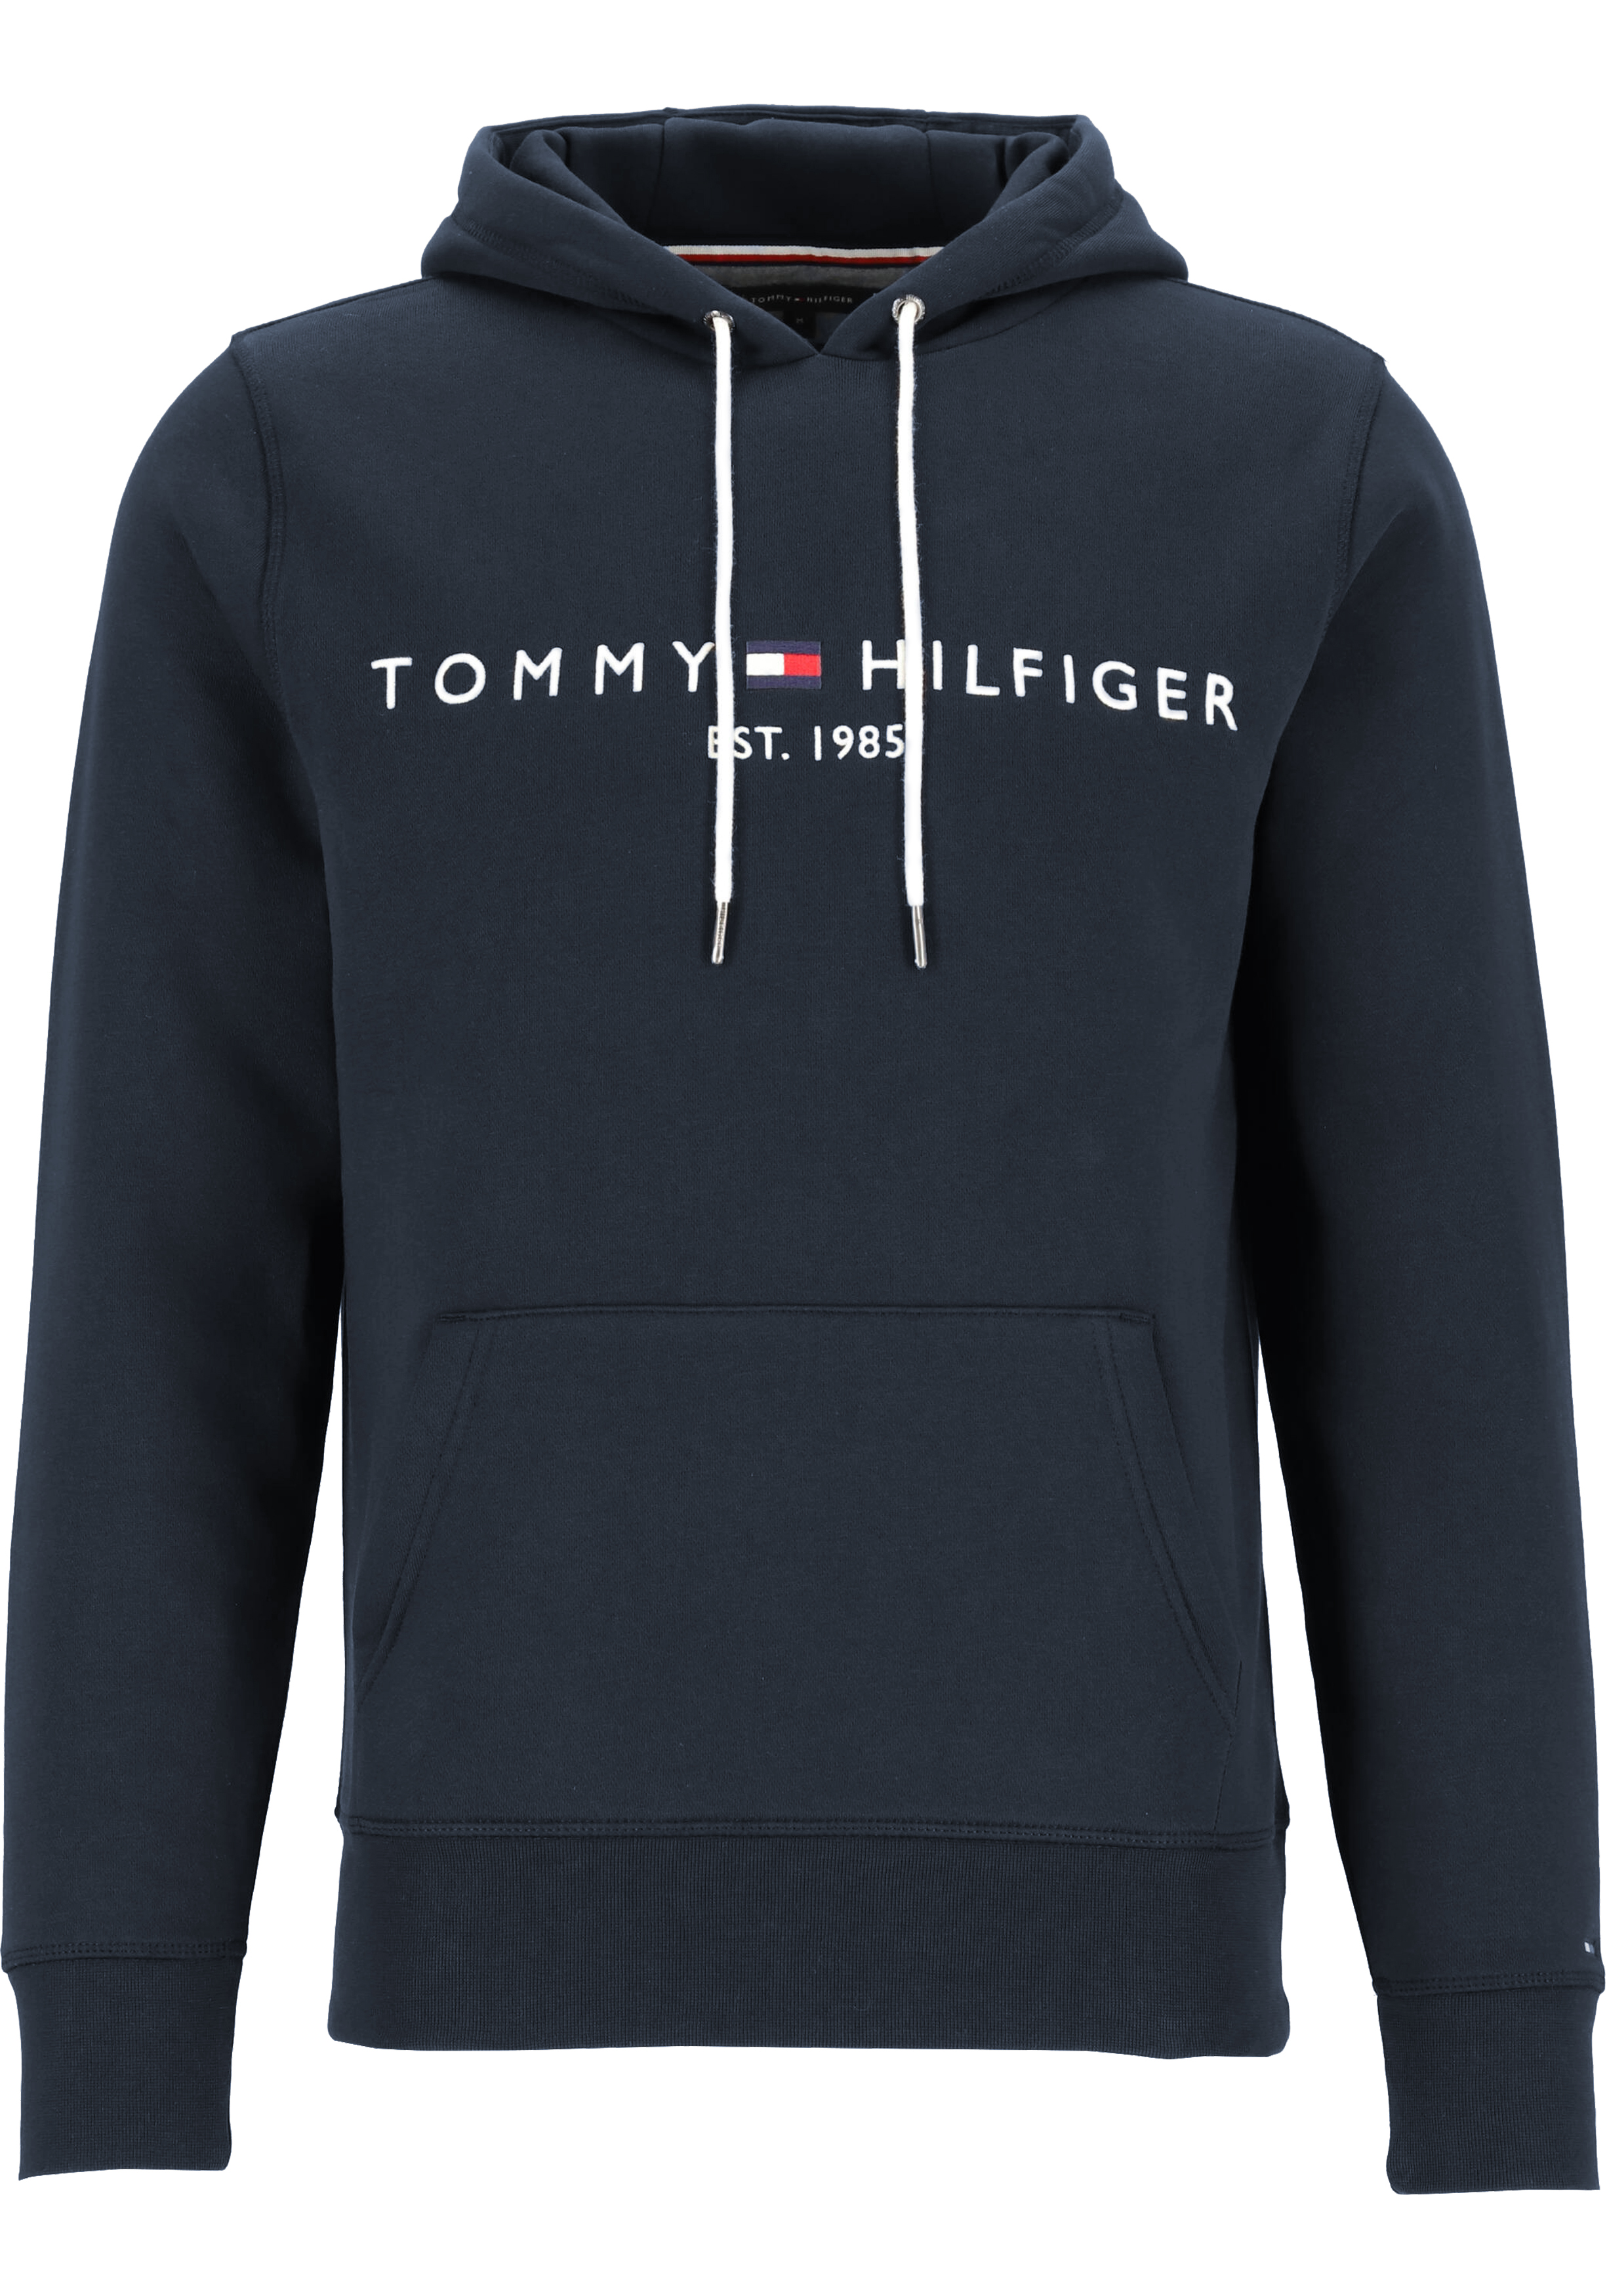 methaan Luxe Ijzig Tommy Hilfiger Core Tommy logo hoody, regular fit heren sweathoodie,... -  Zomer SALE tot 50% korting